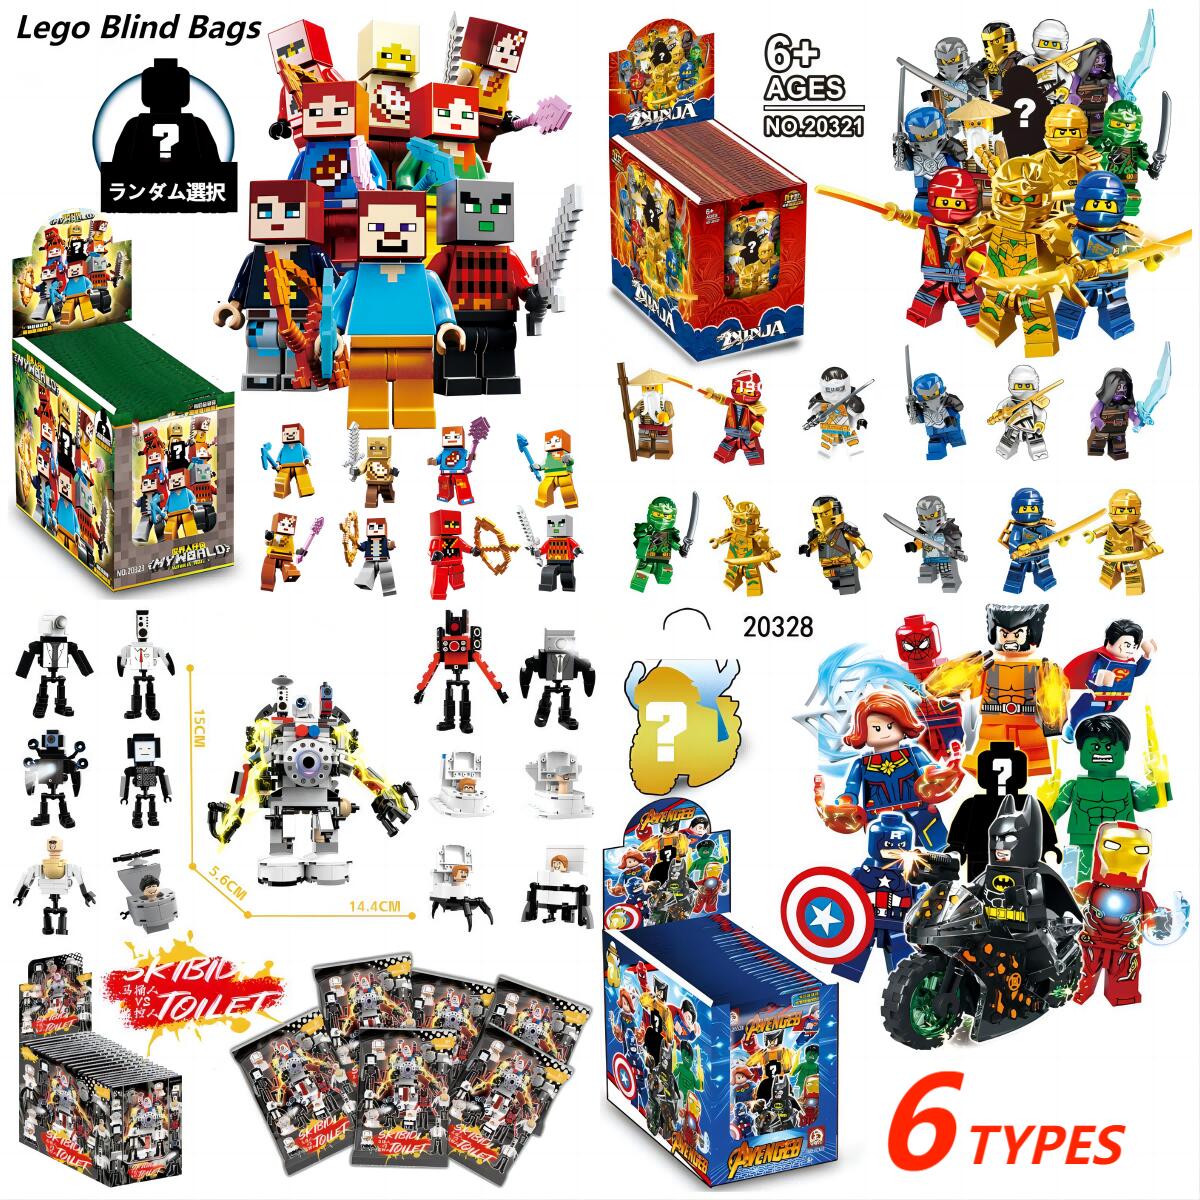 【Lego blind bags！Skibidi toilet/Minecraft/The Avengers/Ninjas/Iron Man】レゴ互換 ミニフィグ スキビディトイレ/マインクラフト風/アベンジャーズ/忍者/スワットチーム ブラインドボックス グッズ 誕生日用品 子供へのギフト 感謝祭の日 ハロウィンクリ スマスギフト